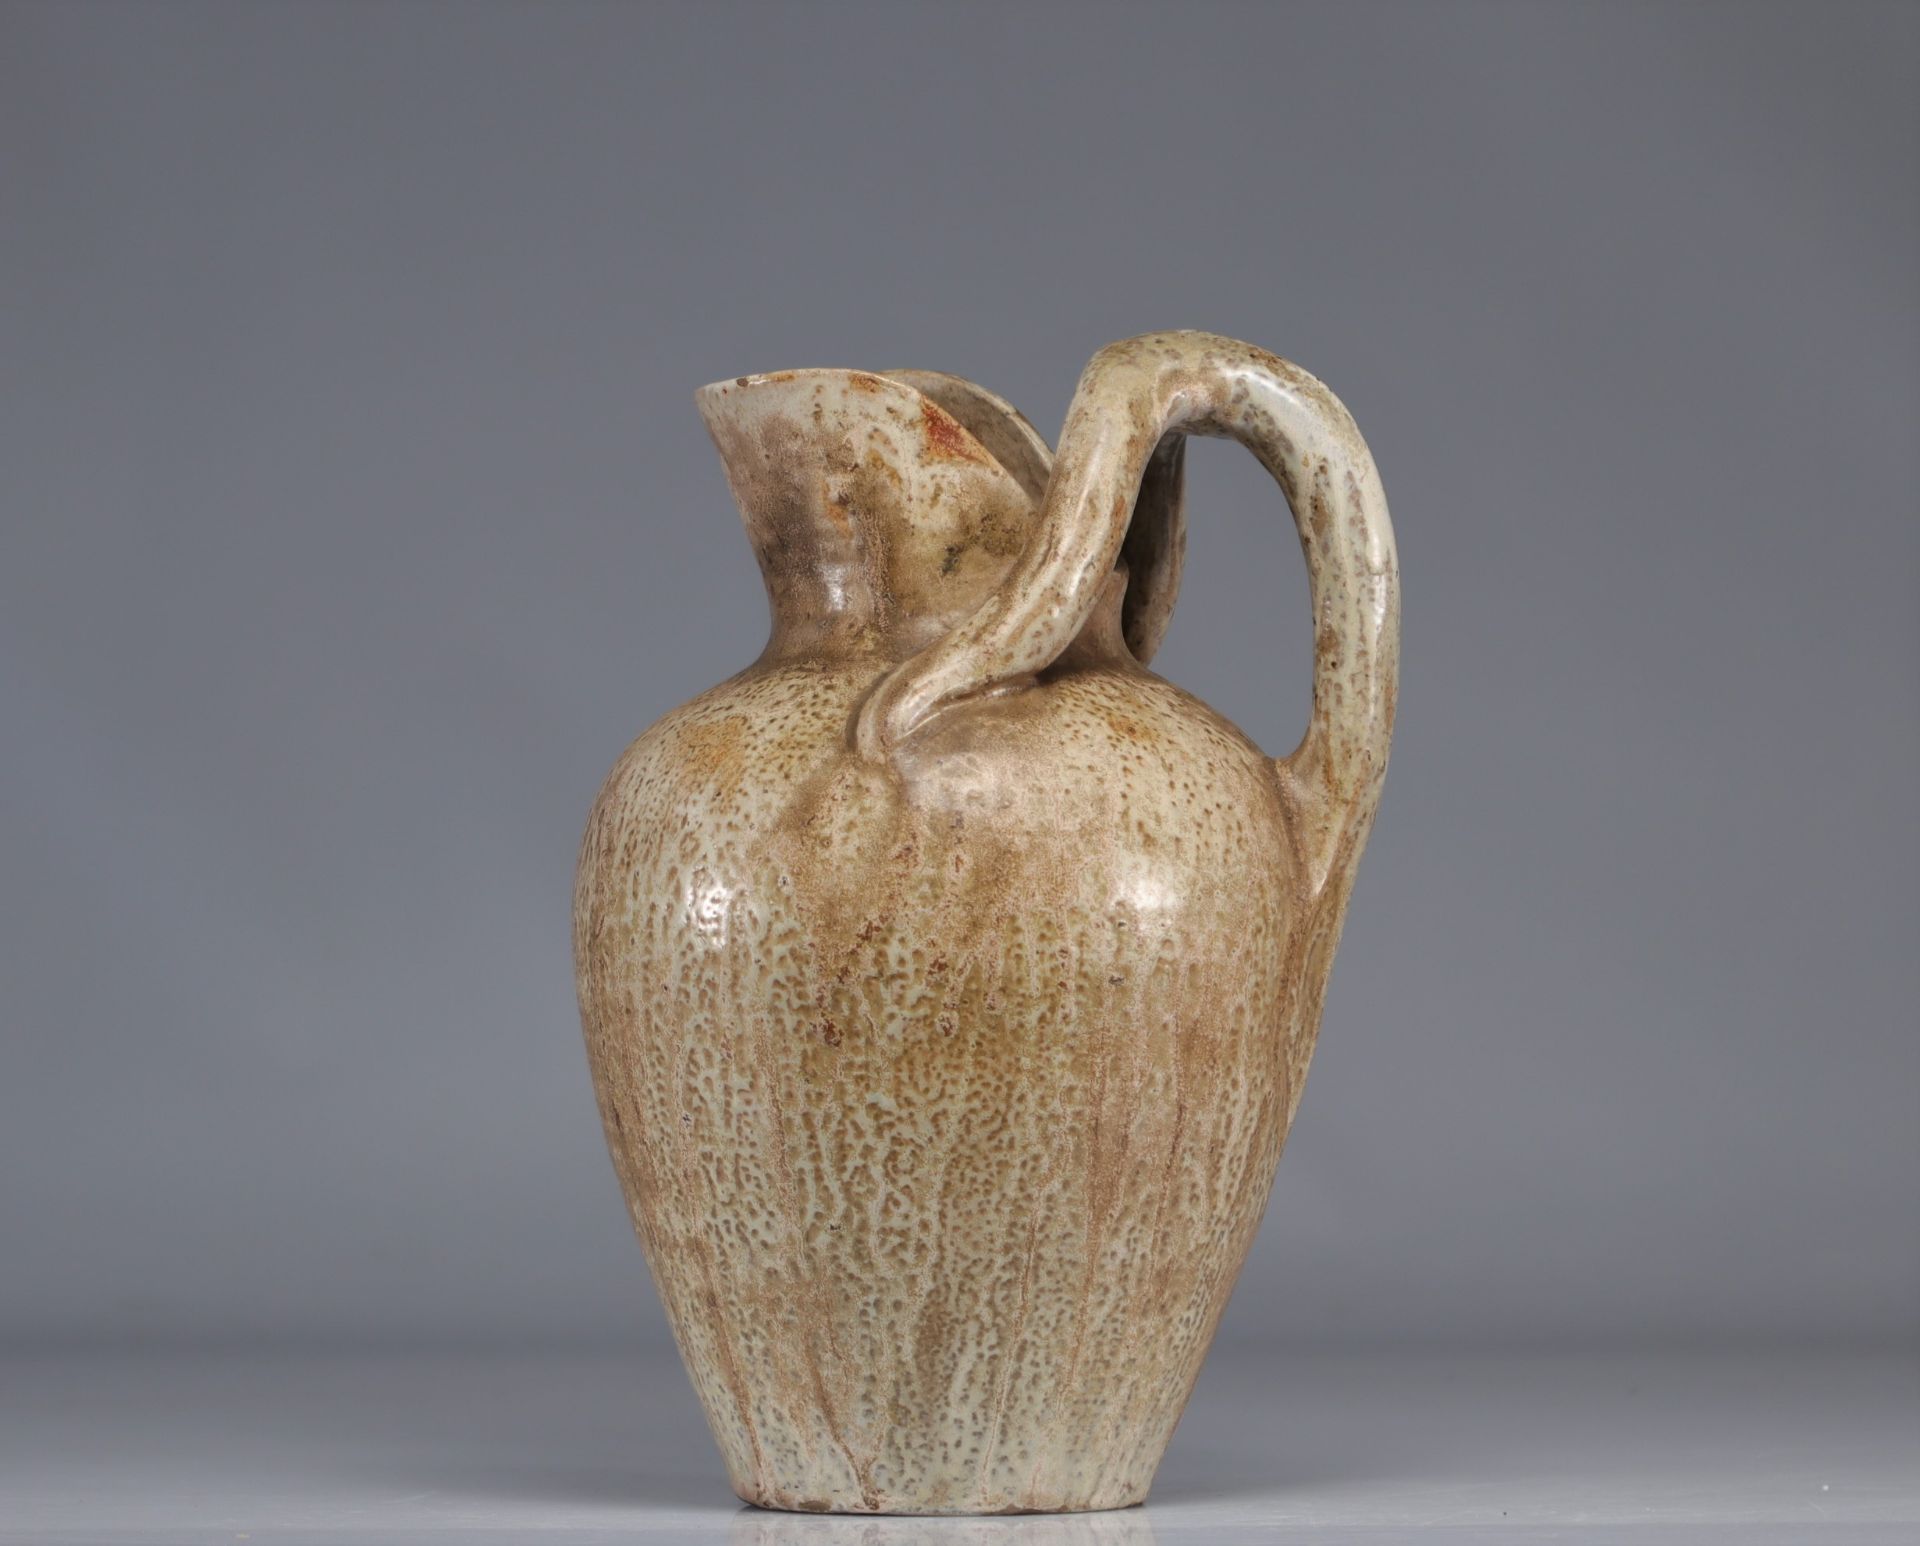 Edgard AUBRY (1880-1943) Bouffioulx stoneware vase from Belgium, 1900